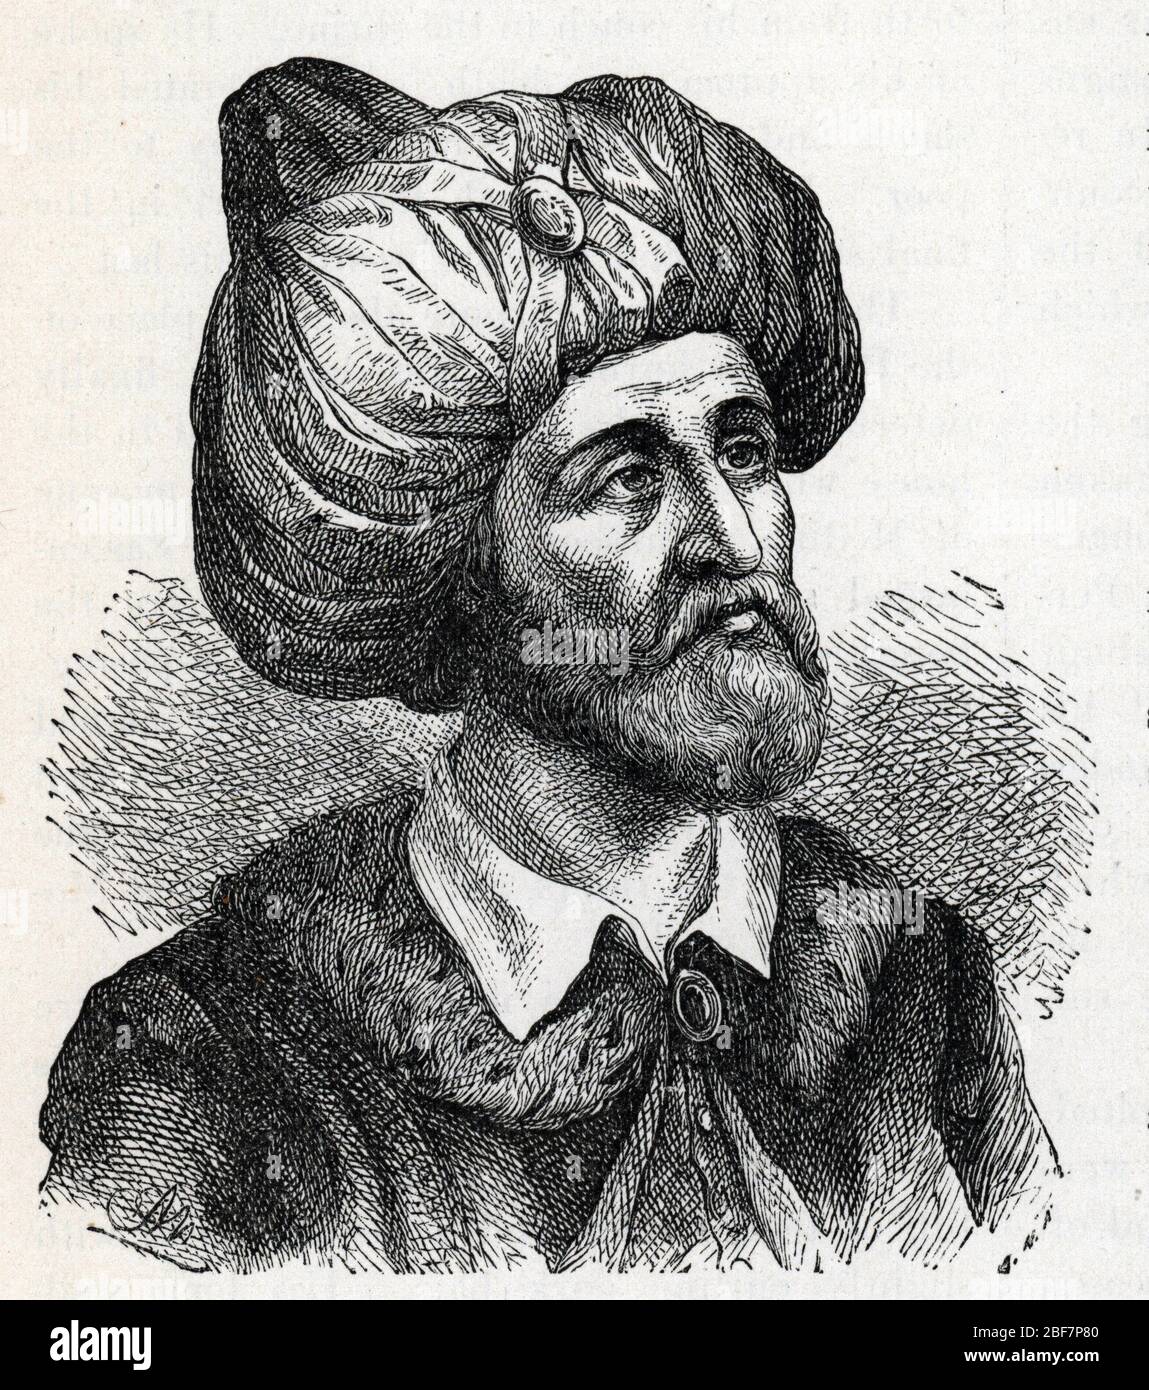 Representation du prophete Mahomet ( Muhammad ou Mohammed) Gravure tiree de "History of the world" de Ridpath 1885 Collection privee Stock Photo